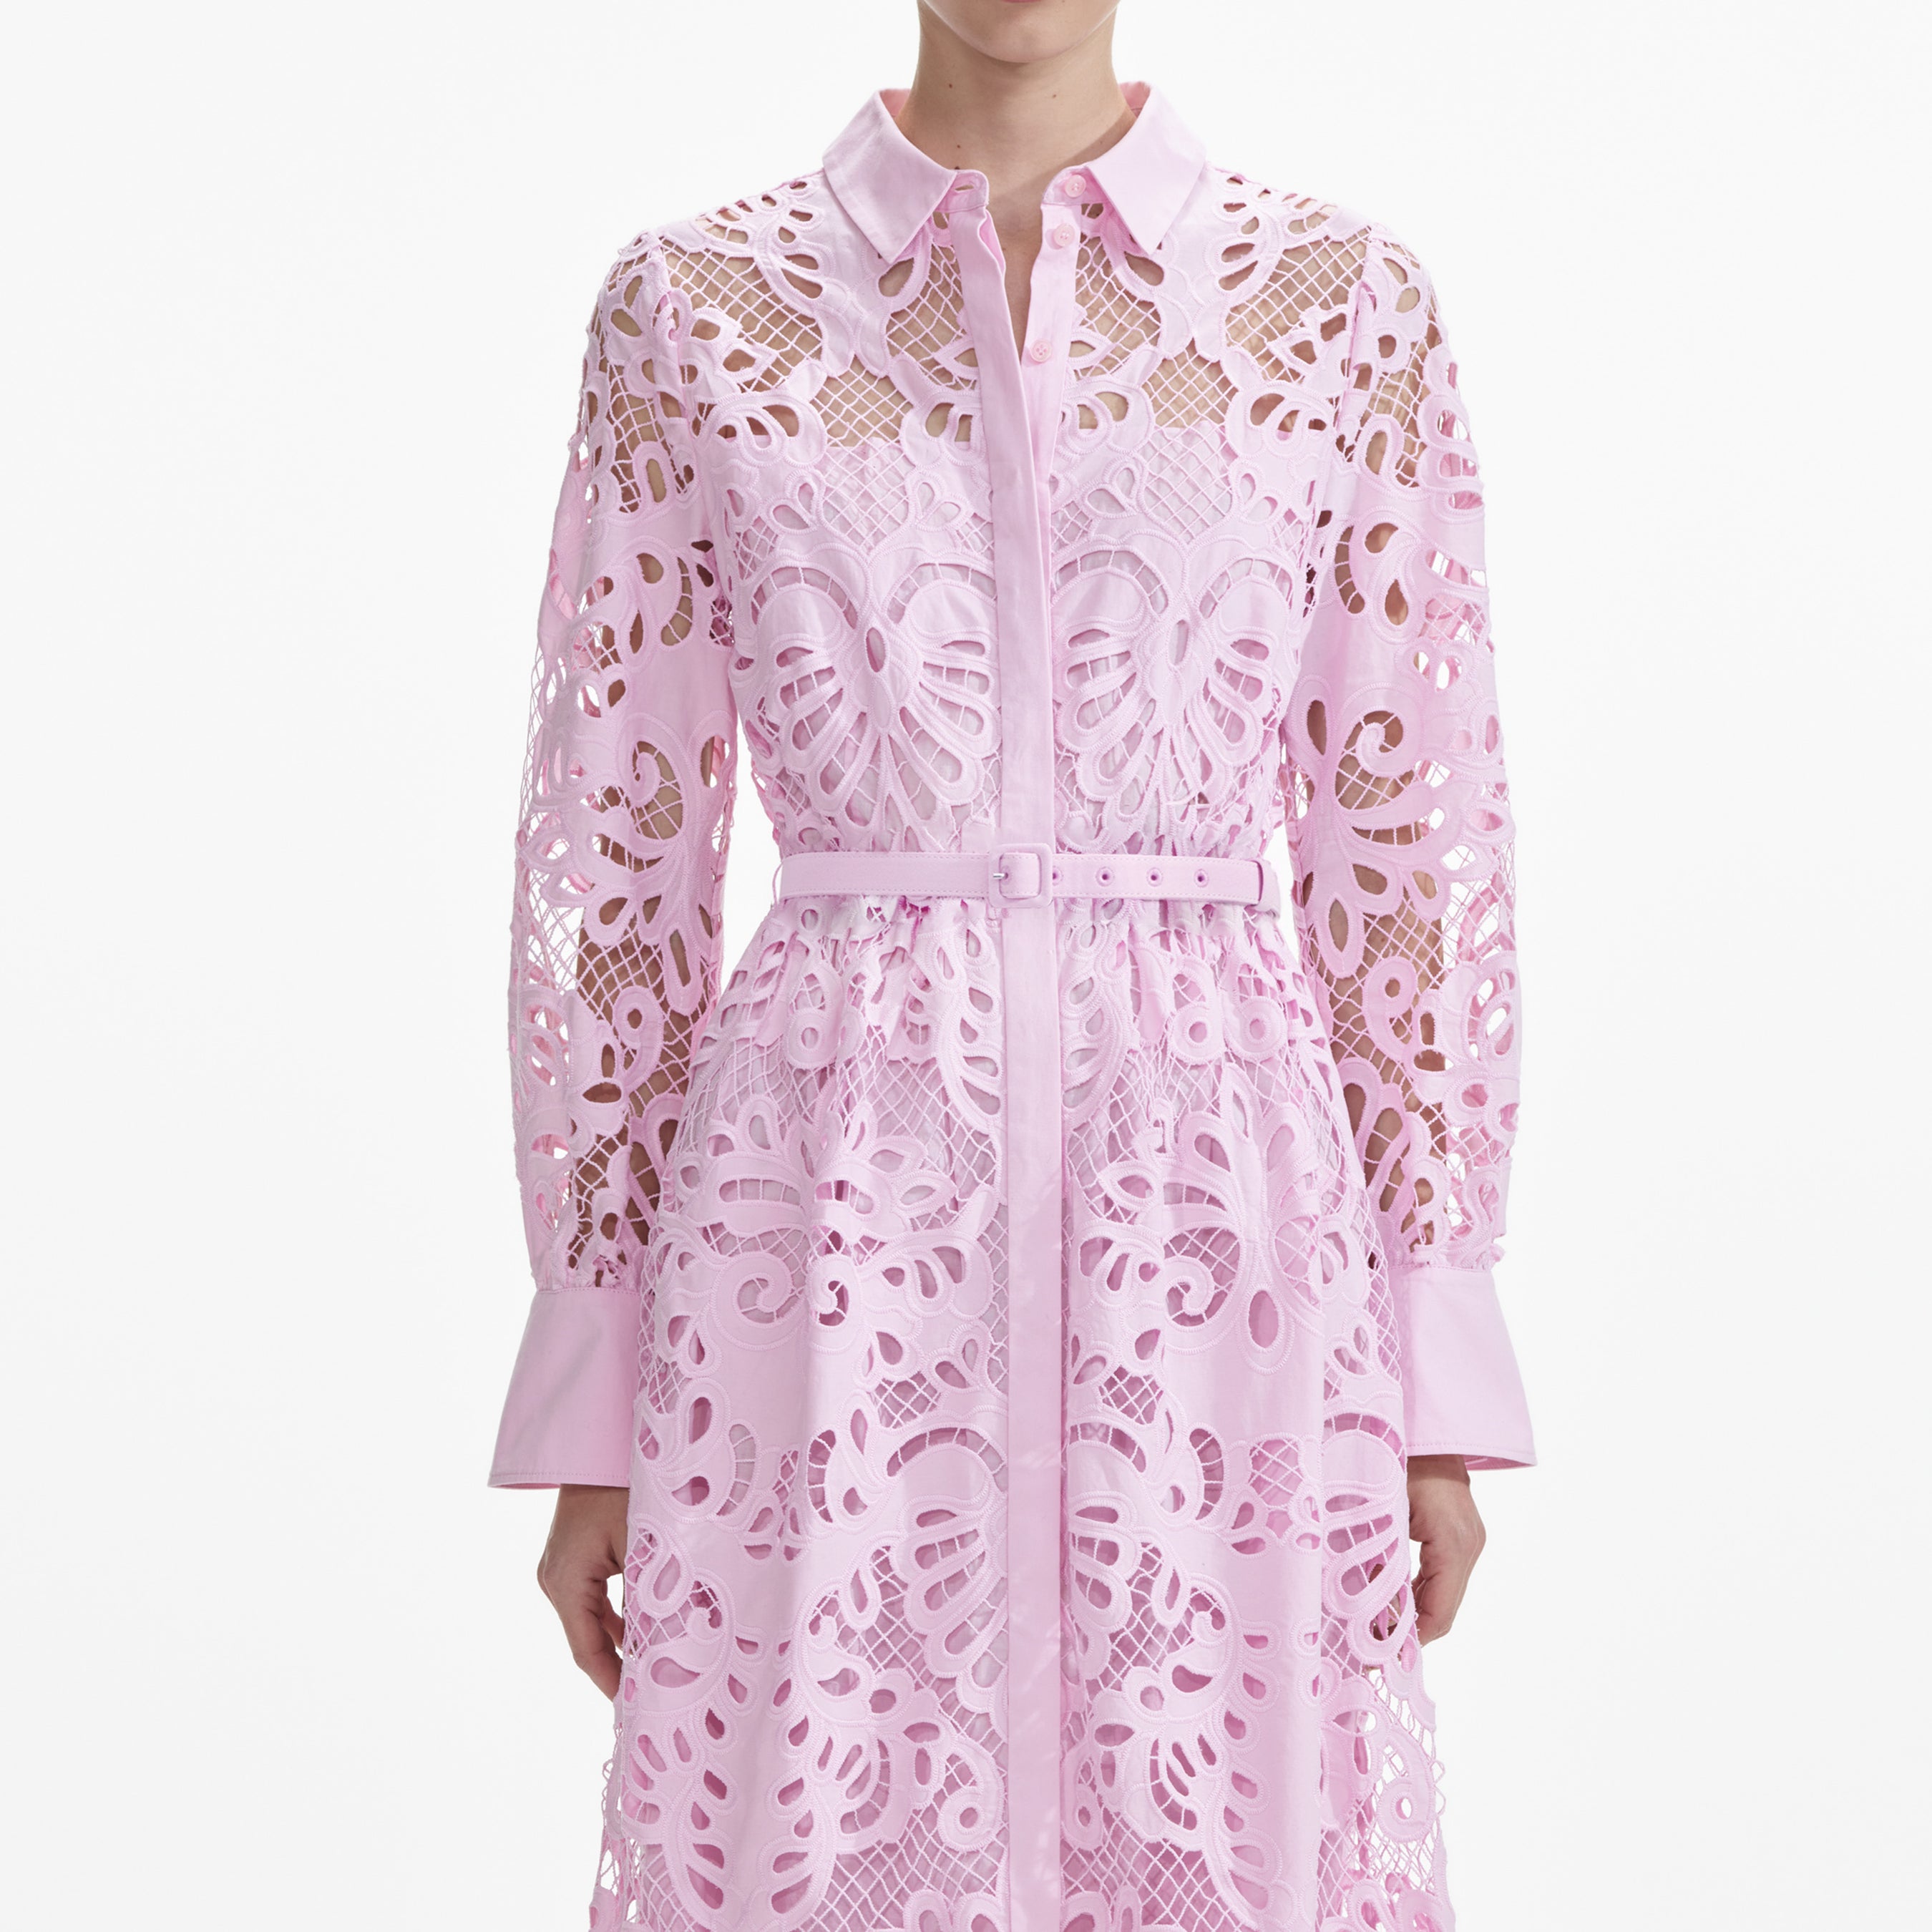 Pink Cotton Lace Maxi Dress